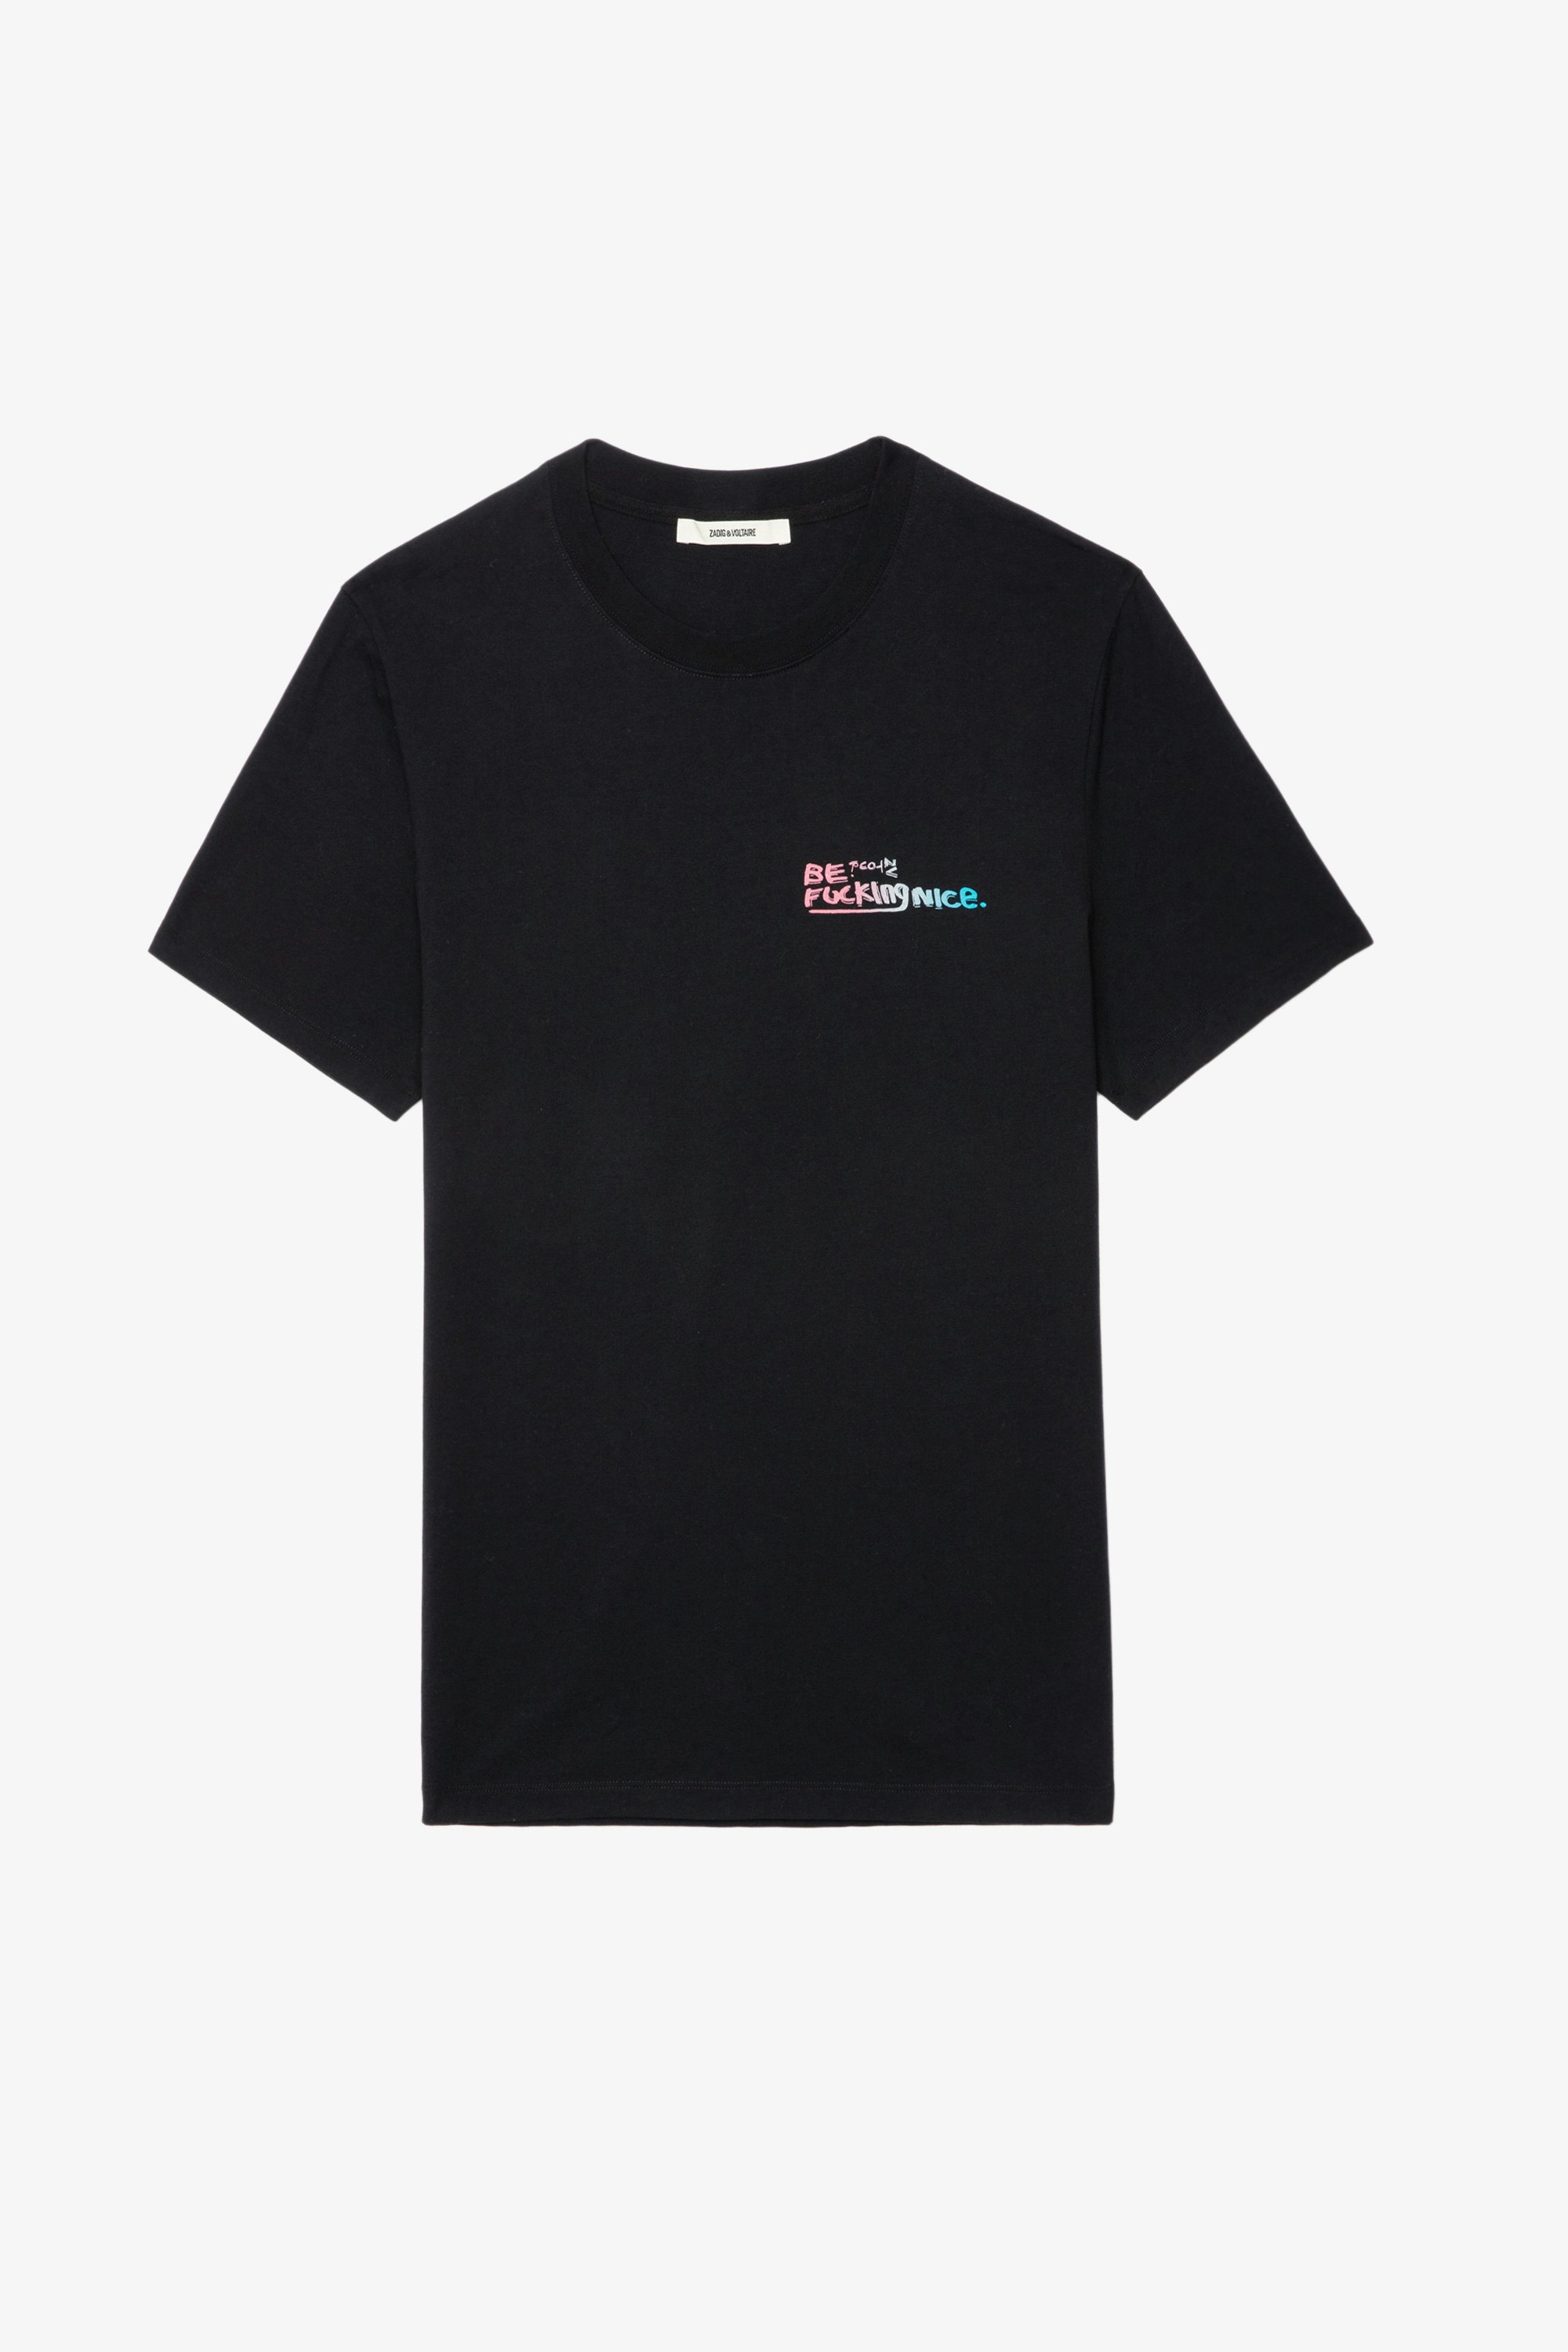 Camiseta Ted Estampado Fotográfico - Camiseta negra de algodón con estampado fotográfico Graffiti.